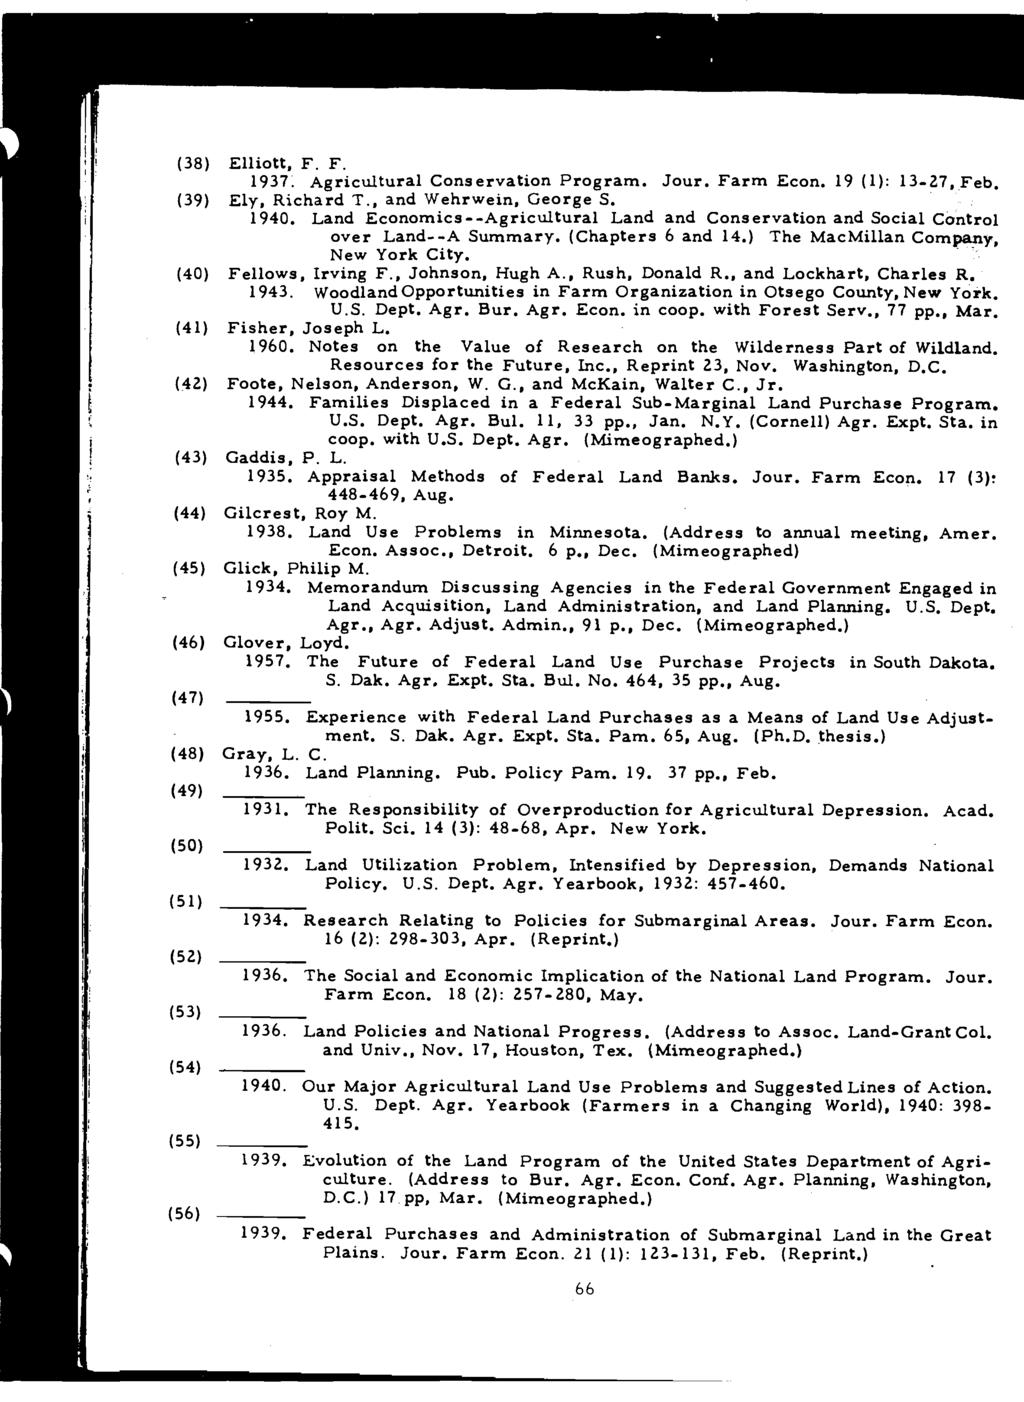 Elliott, F. F. 1937. Agricultural Conservation Program. Jour. Farm Econ. 19 (1): 13-27, Feb. Ely, Richard T., and Wehrwein, George S. 1940.